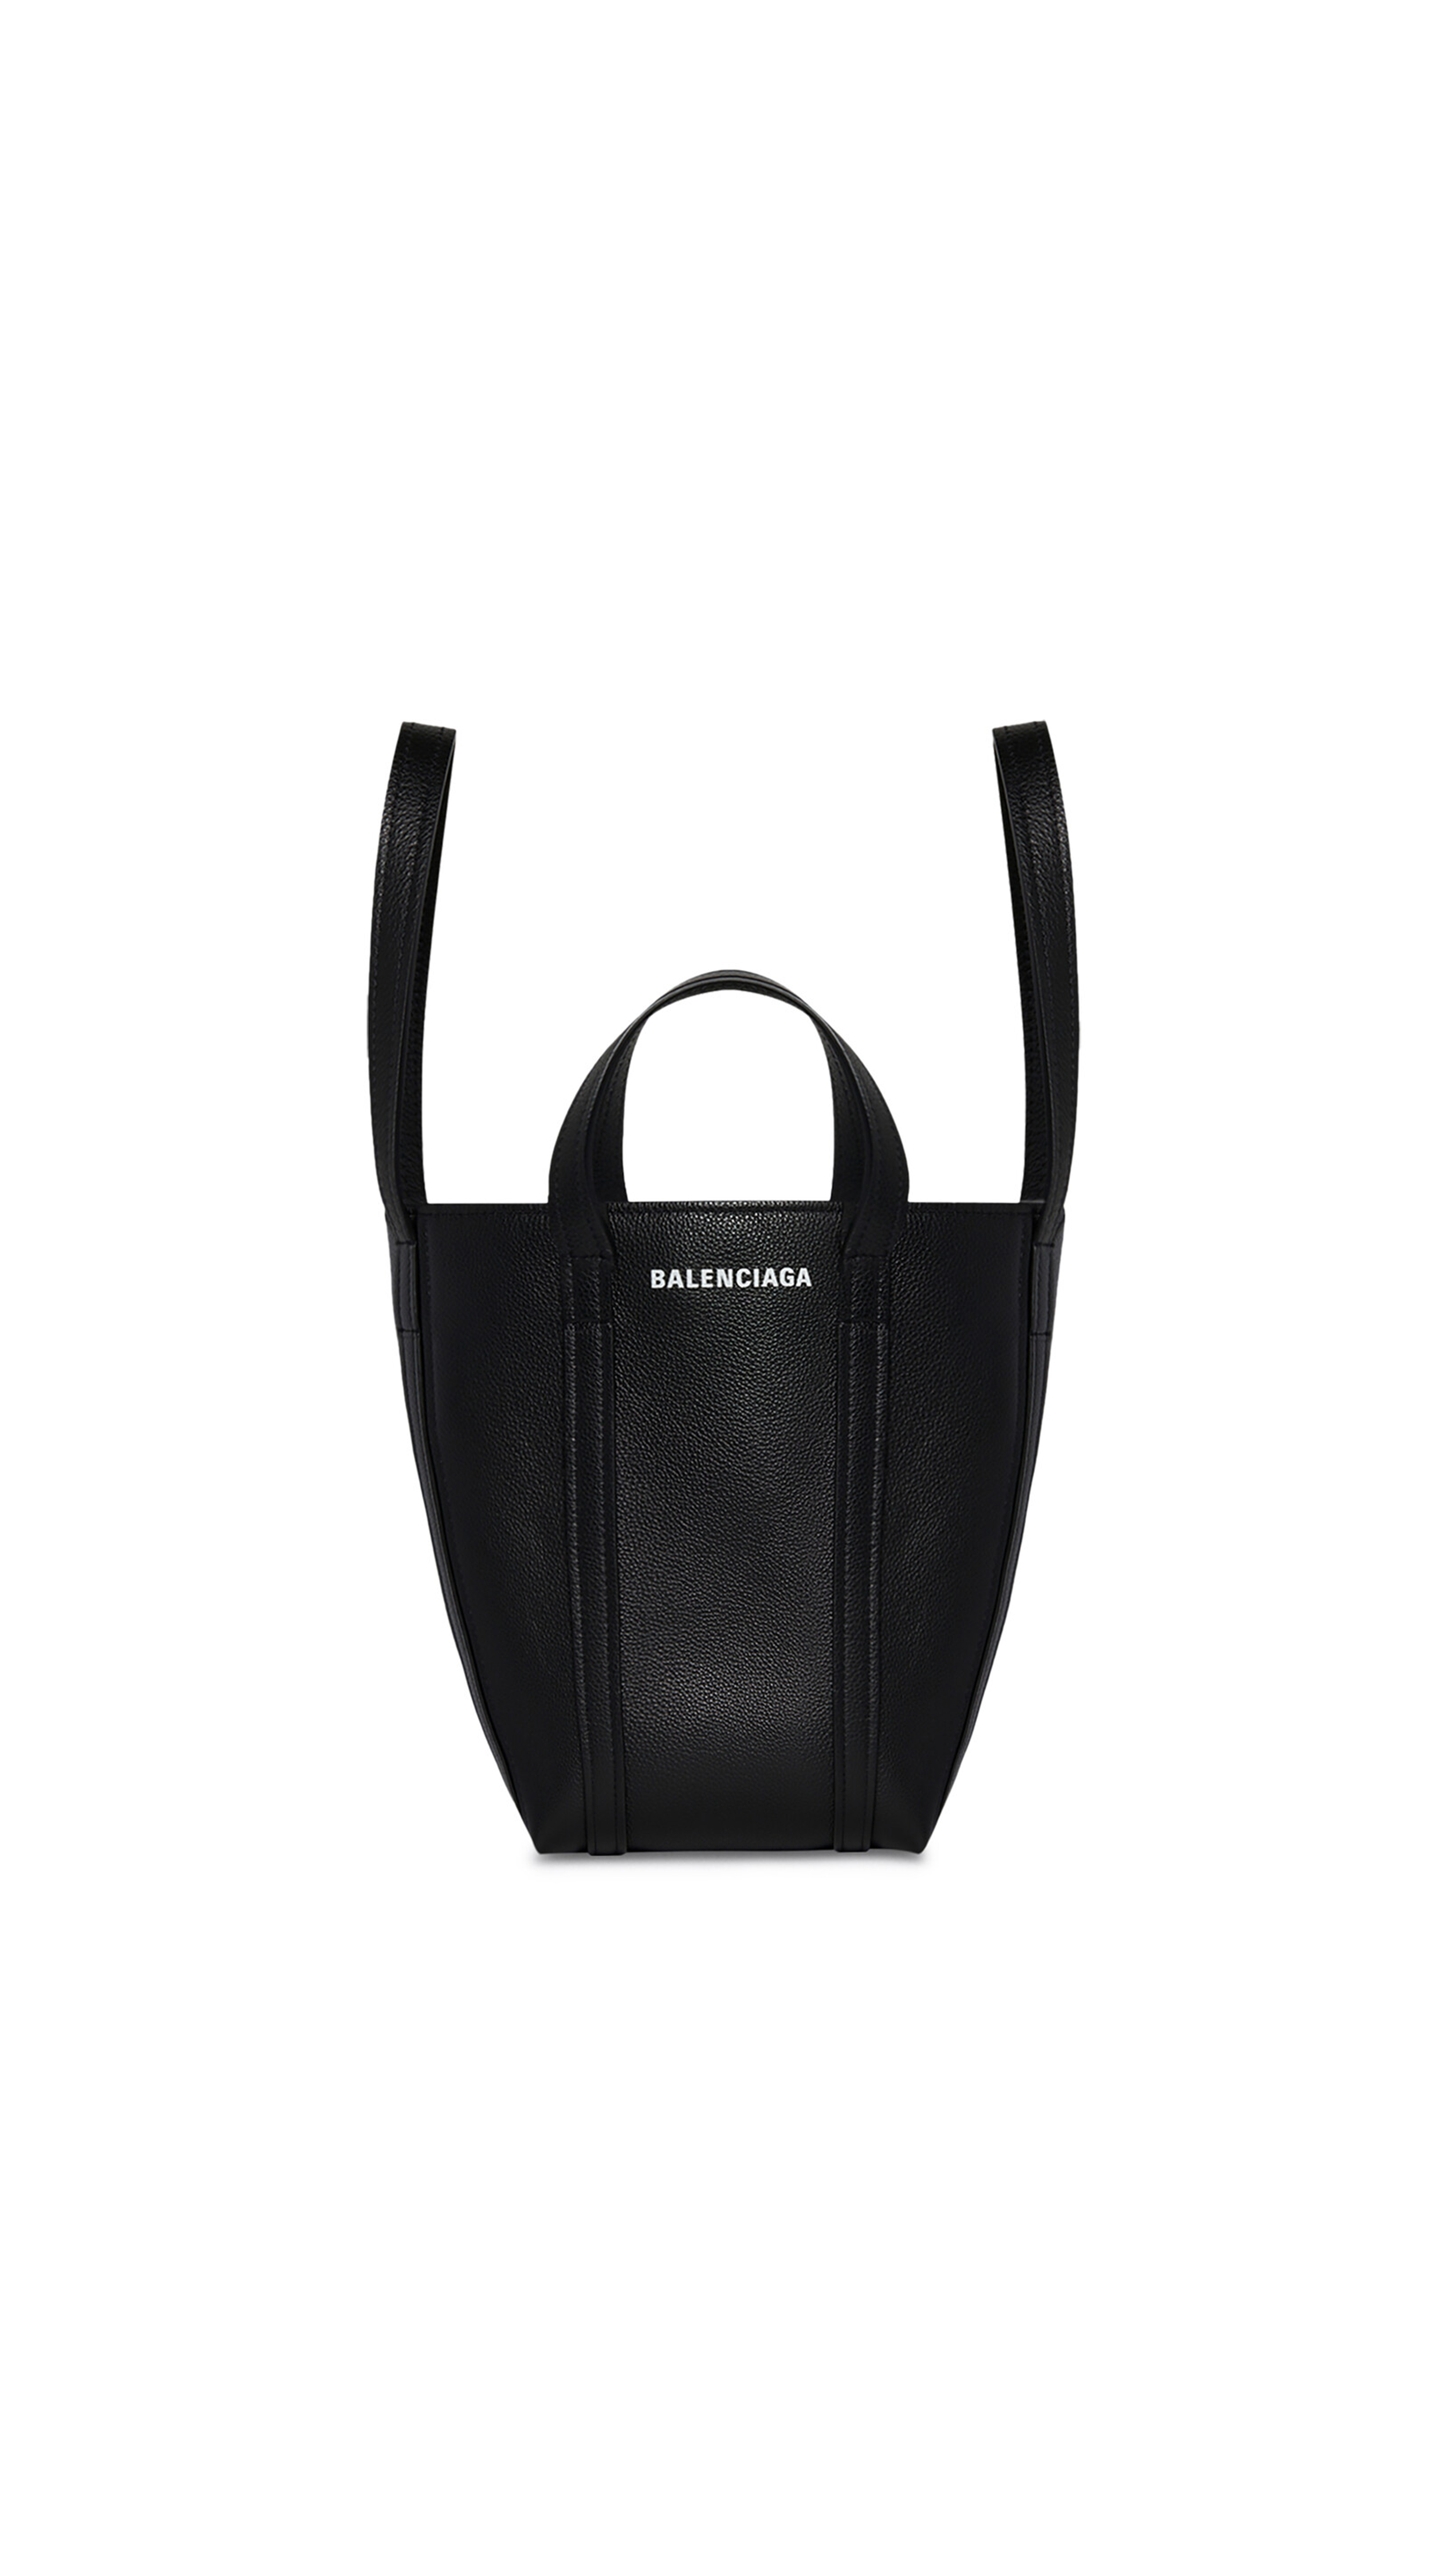 Balenciaga Xxs Every Day Leather Tote Bag - Black